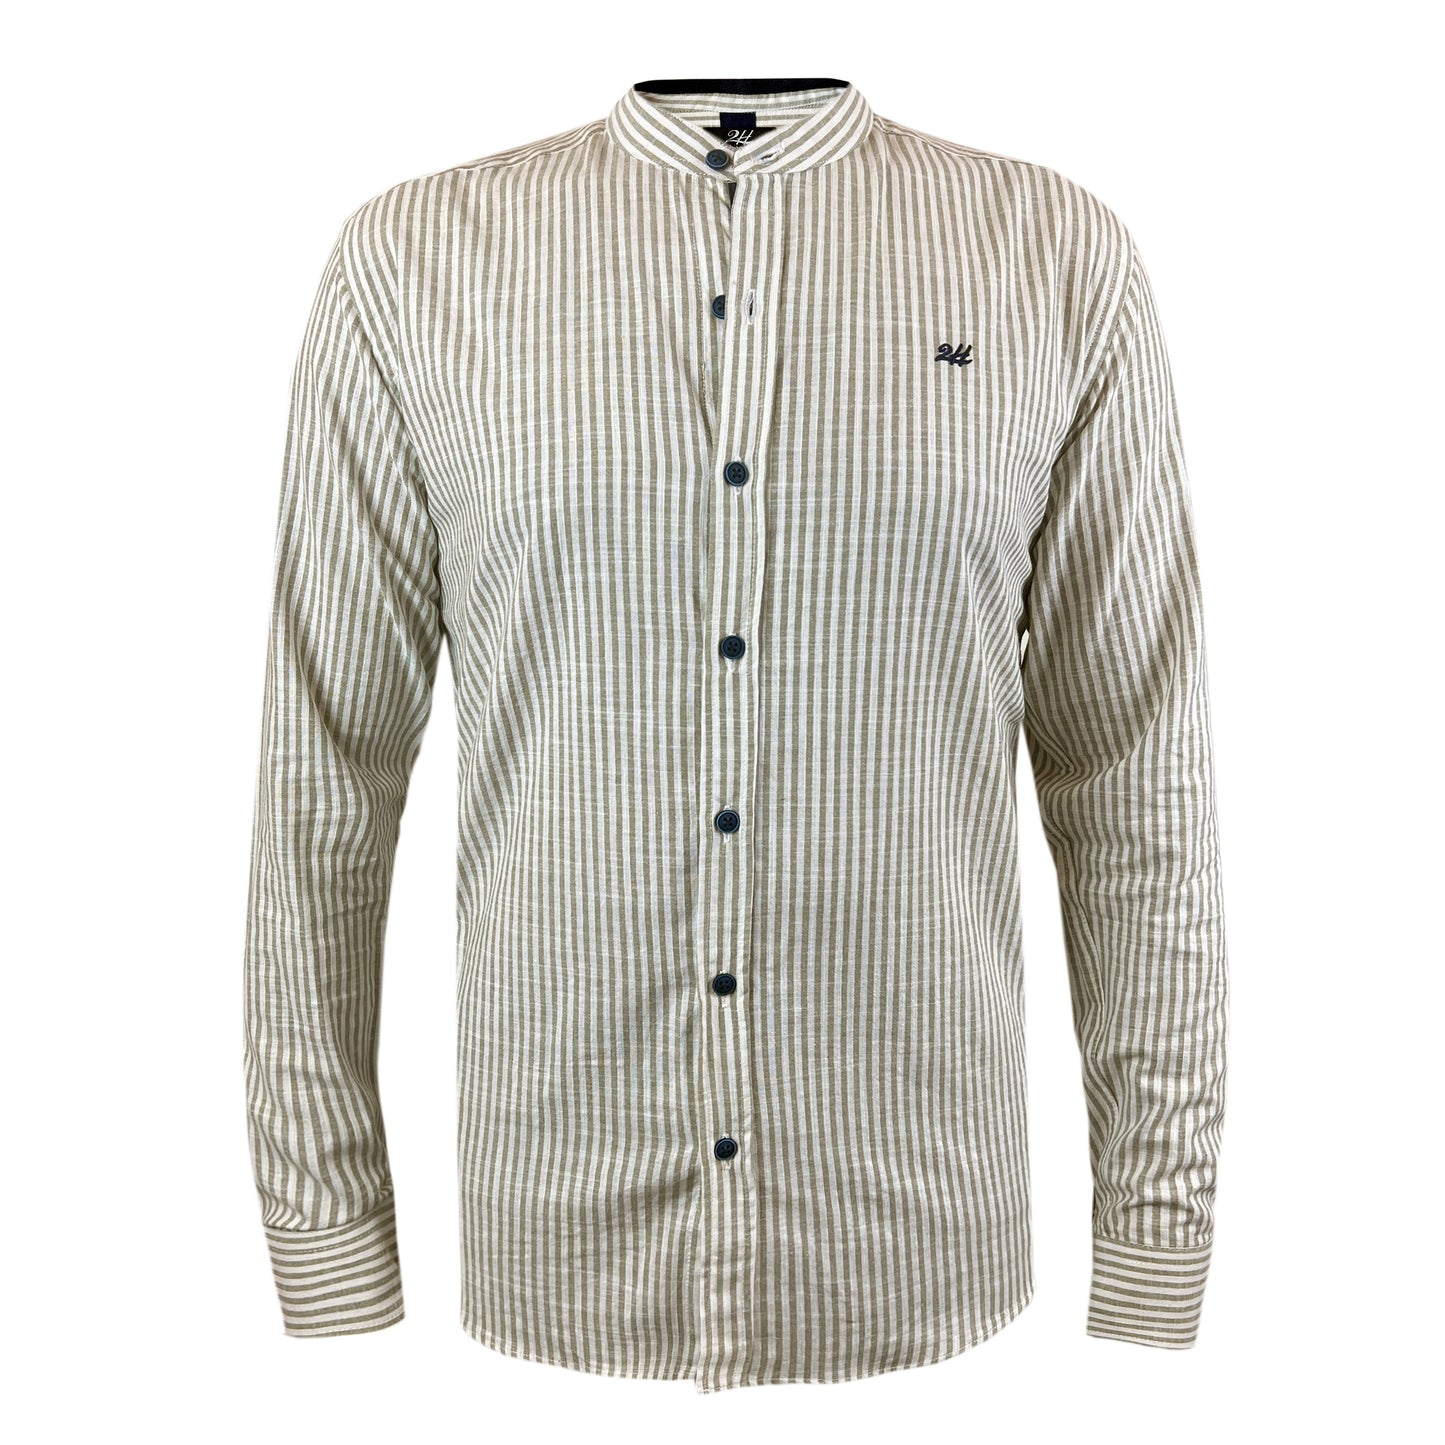 2H #1003 Olive Green Striped Linen Shirt